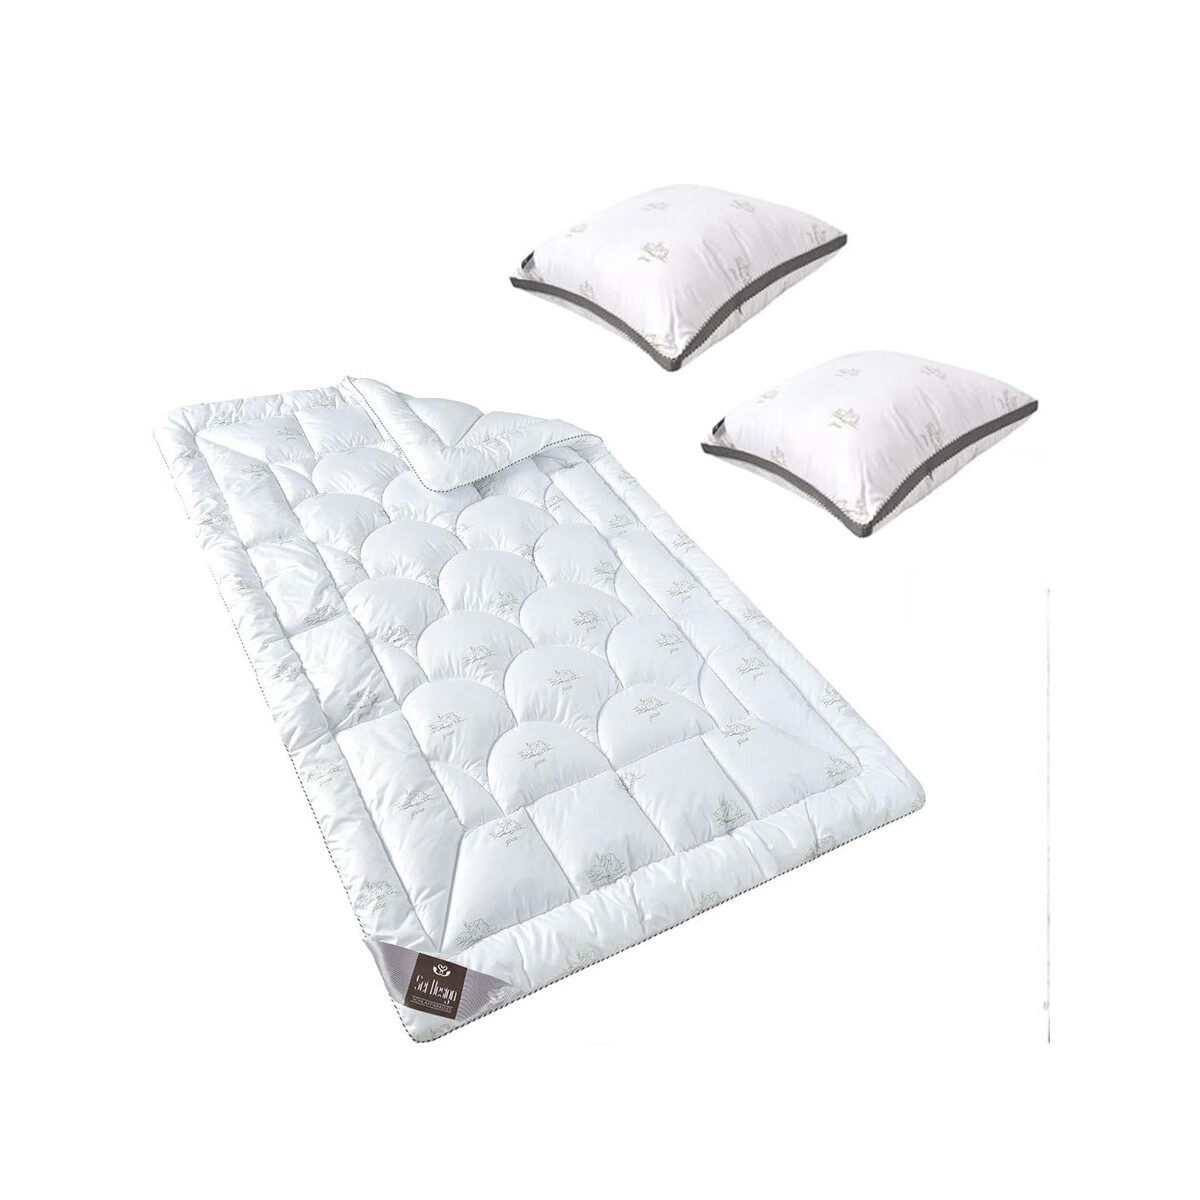 Hochwertige Bettdecken günstig bestellen - Sei Design, 139,90 €